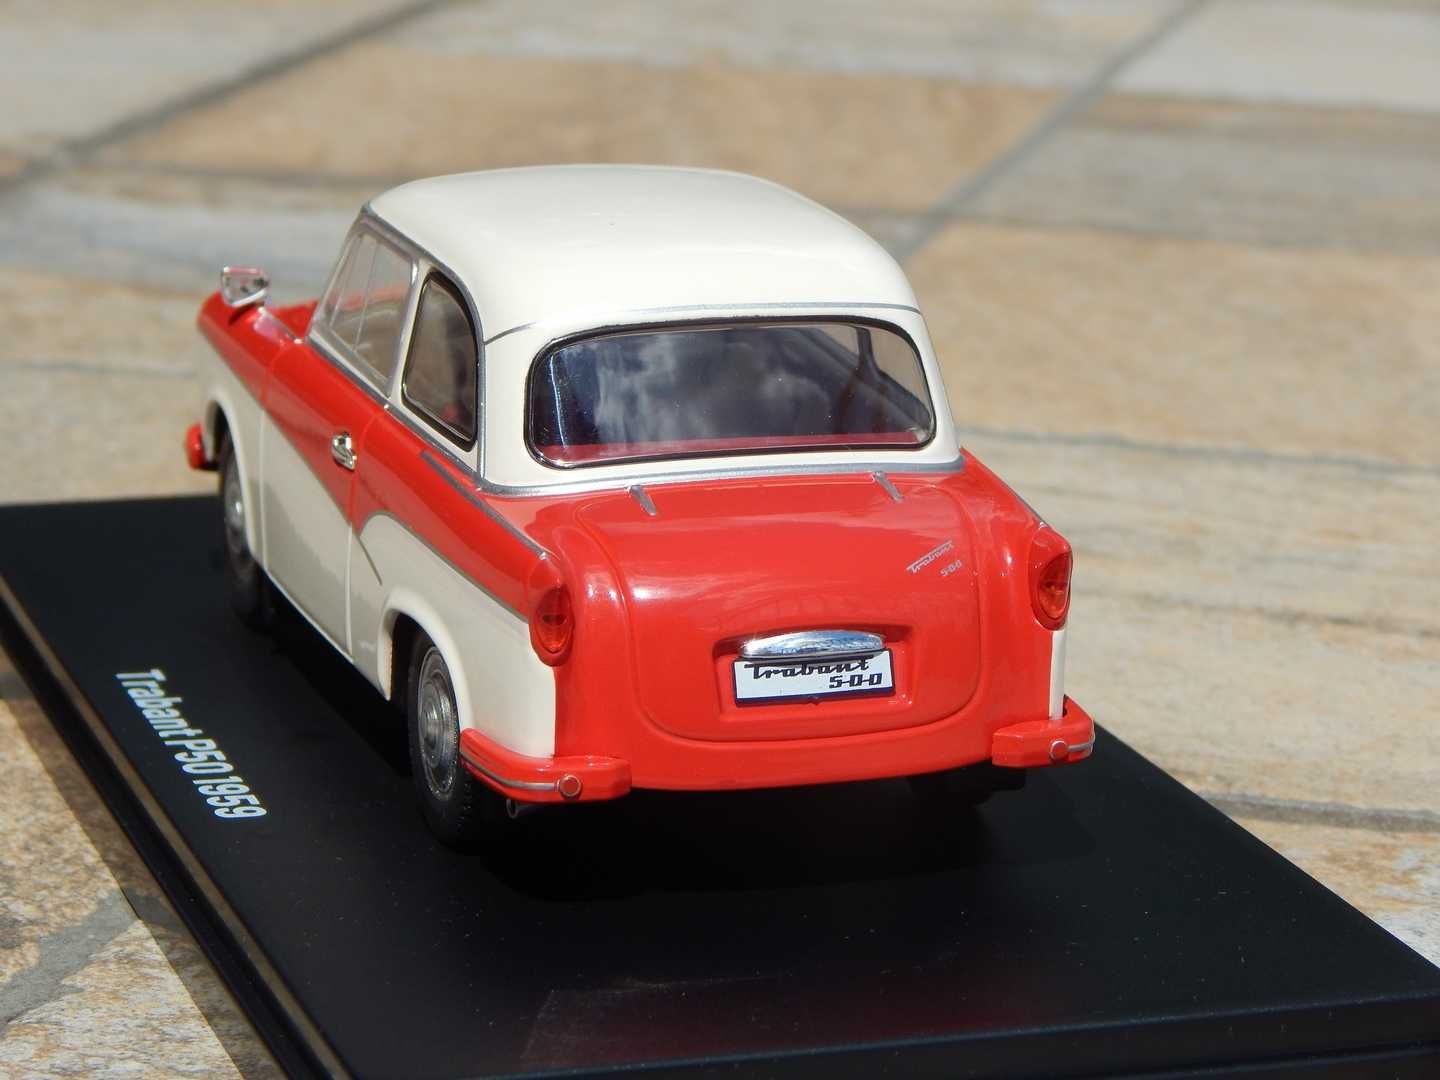 Macheta Trabant P50 1959 scara 1:24 cu ambalaj original